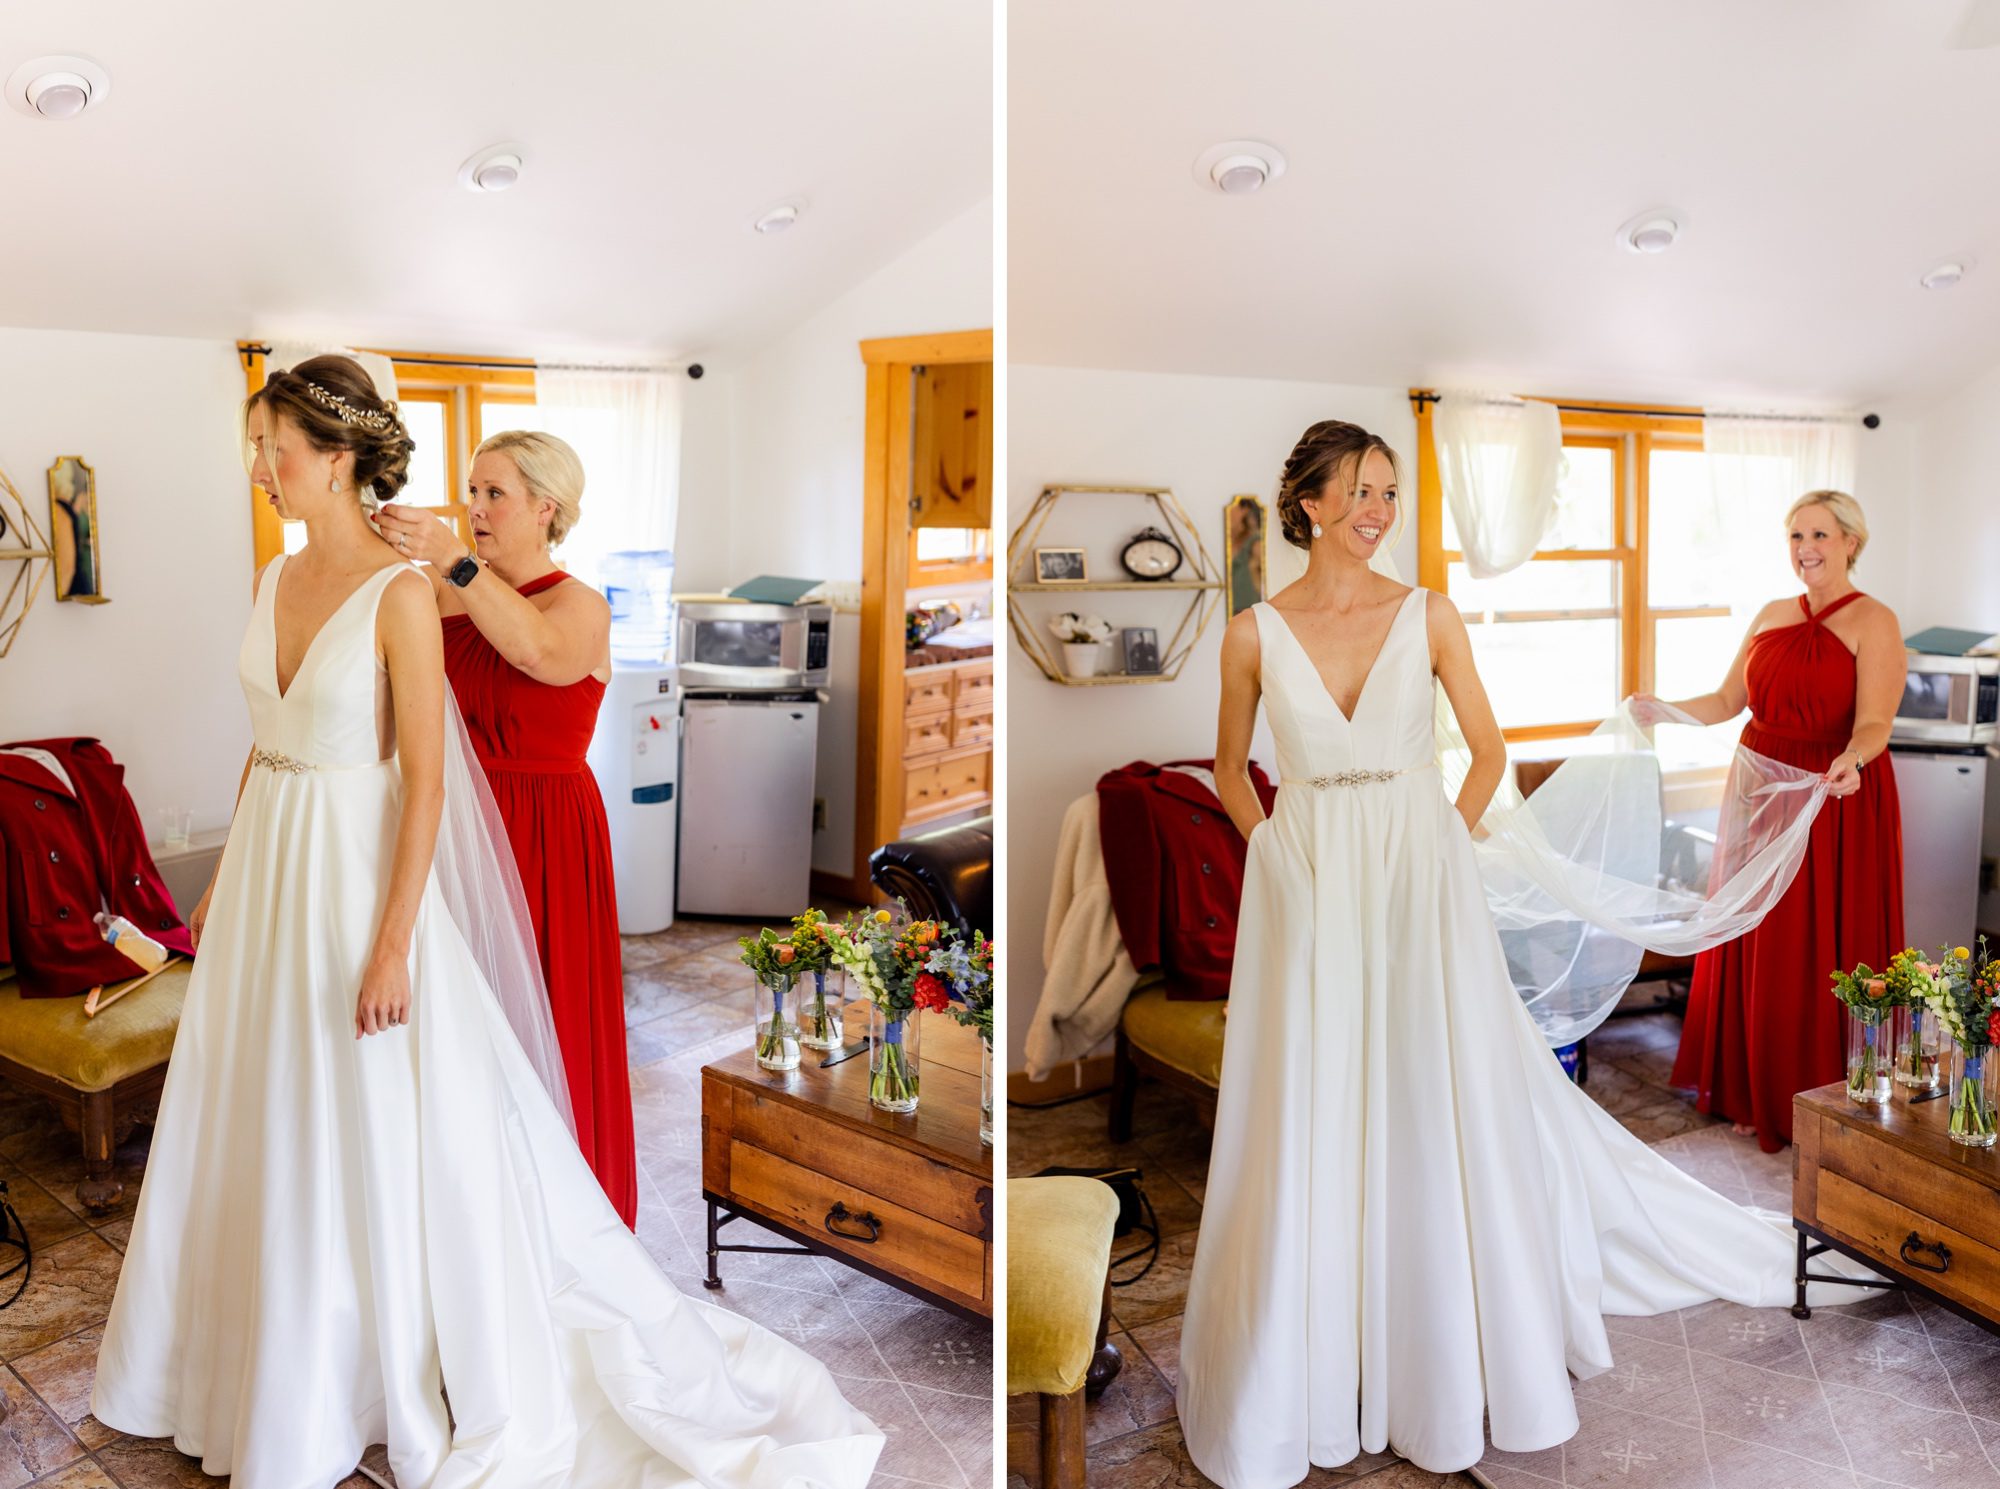 Wedding dress with pockets, wedding veil, Wedding photo ideas, Planet Bluegrass Wedding venue in Lyons Colorado: Colorado Wedding Photographer